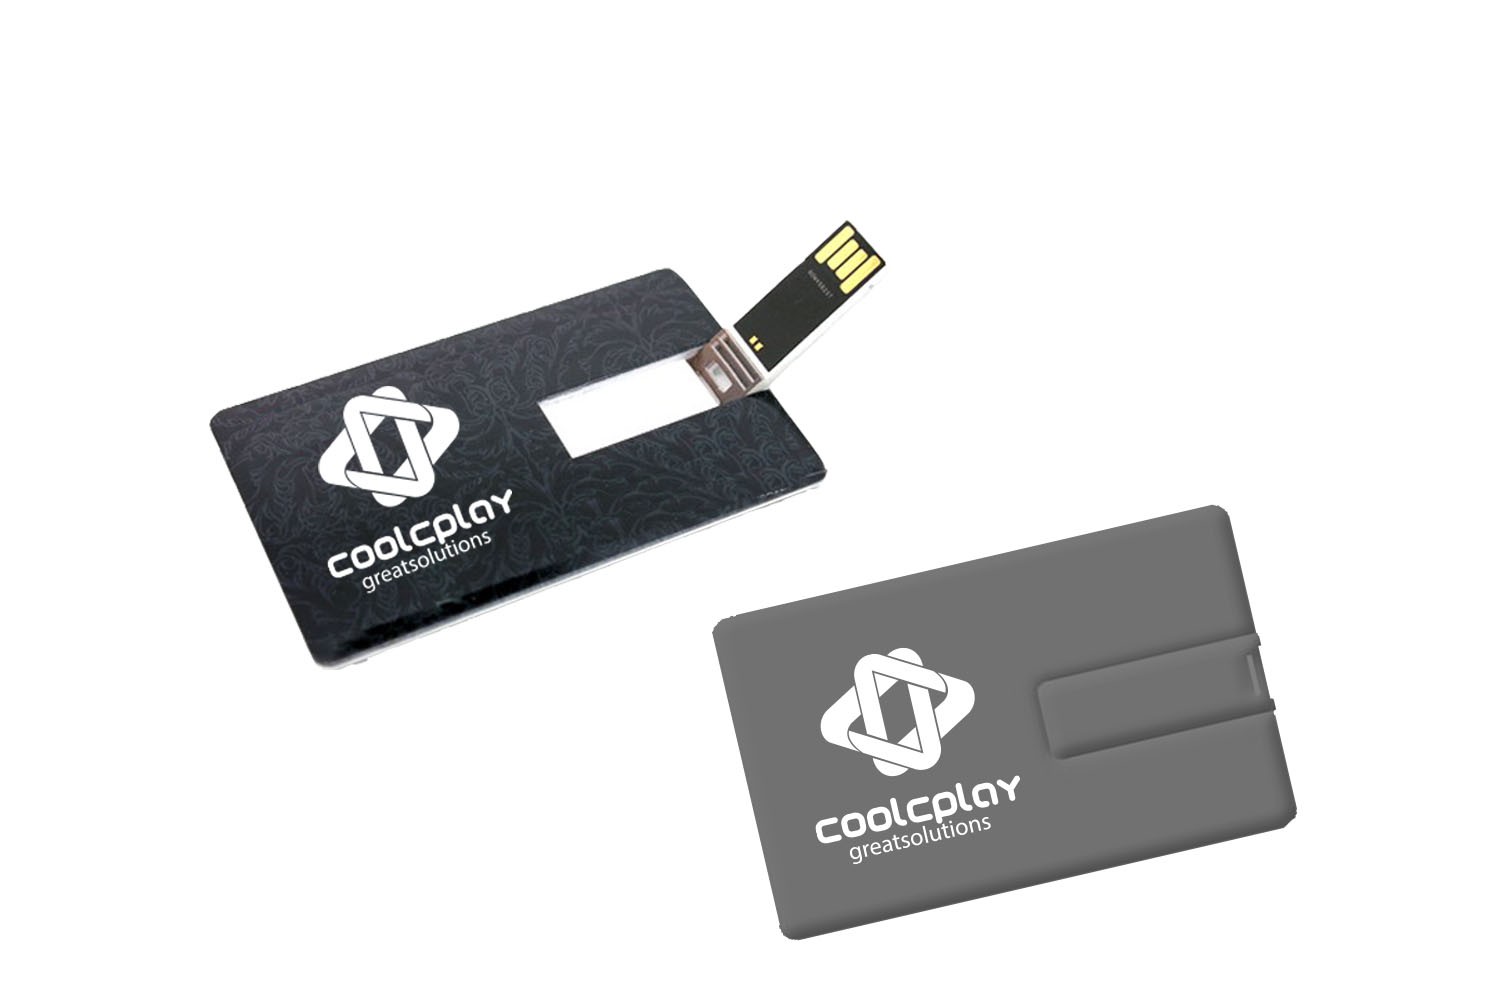 2 GB Credit Card Shape USB Flashdrive